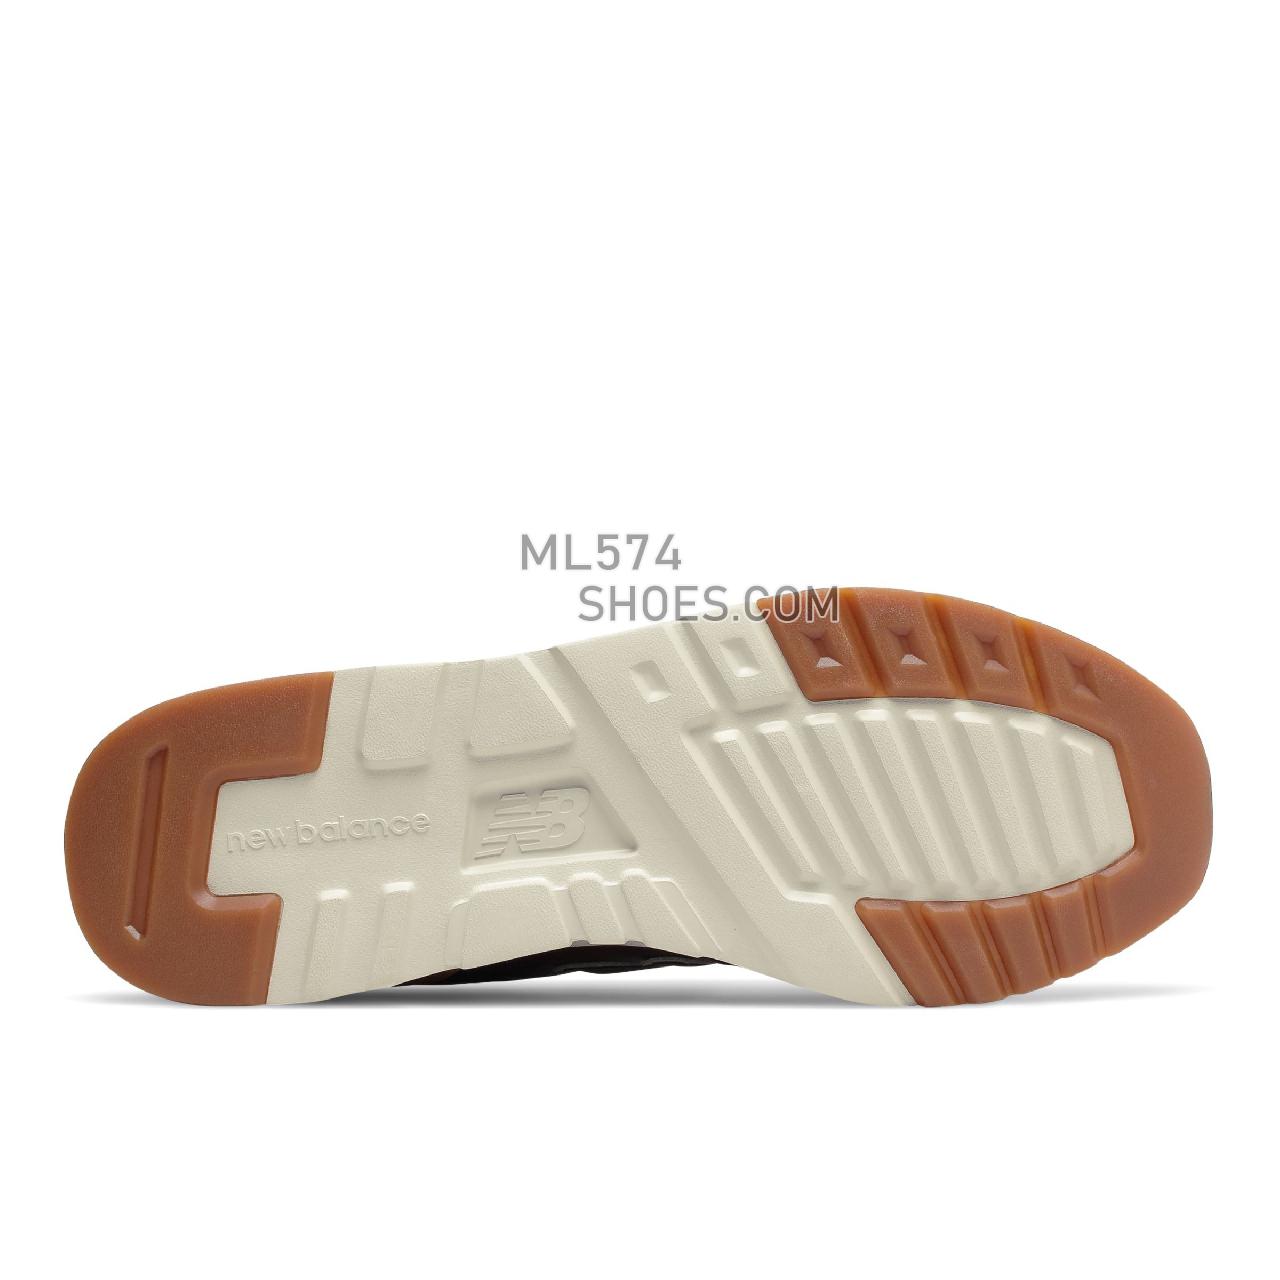 New Balance 997H - Men's Classic Sneakers - Brown with Tan - CM997HWE